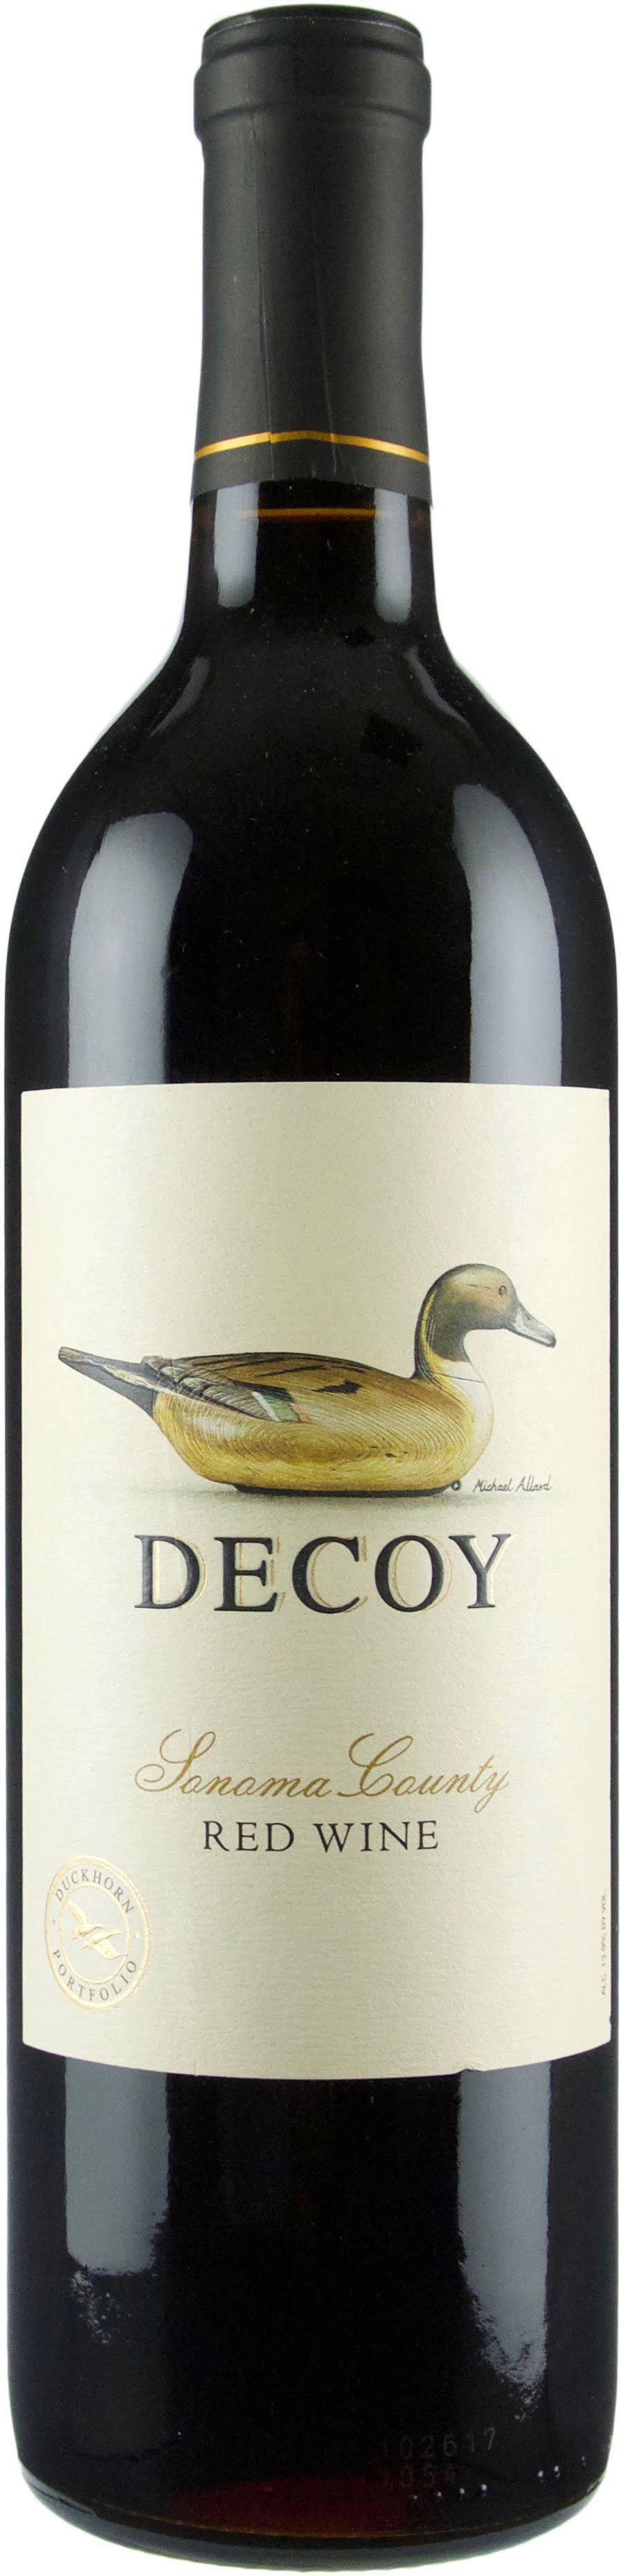 Decoy Red Wine, California - 750 ml